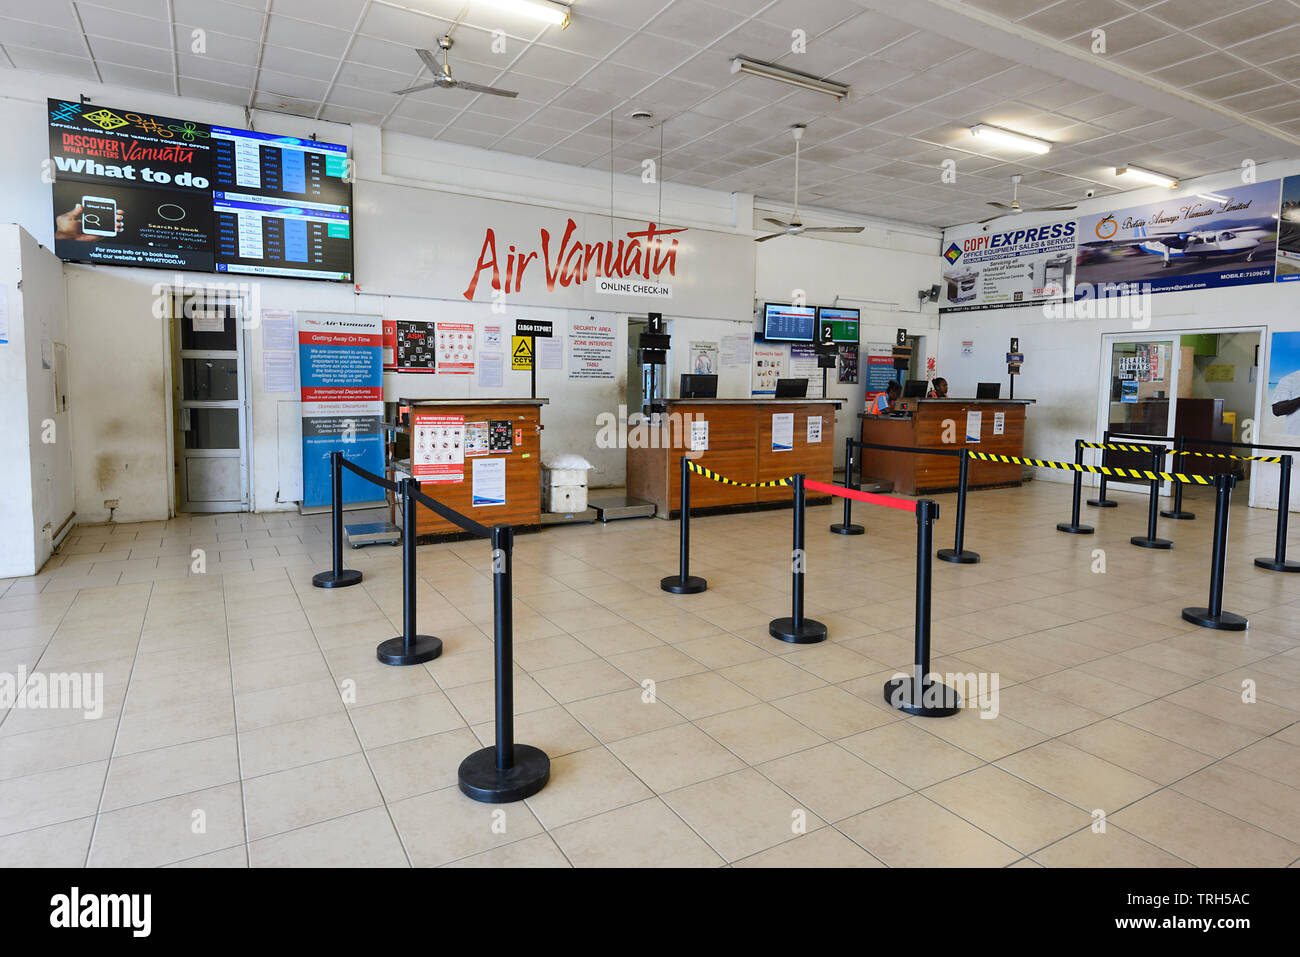 L'Air Vanuata guichets d'enregistrement à l'Aéroport de Port Vila, l'île d'Efate, Vanuatu Banque D'Images